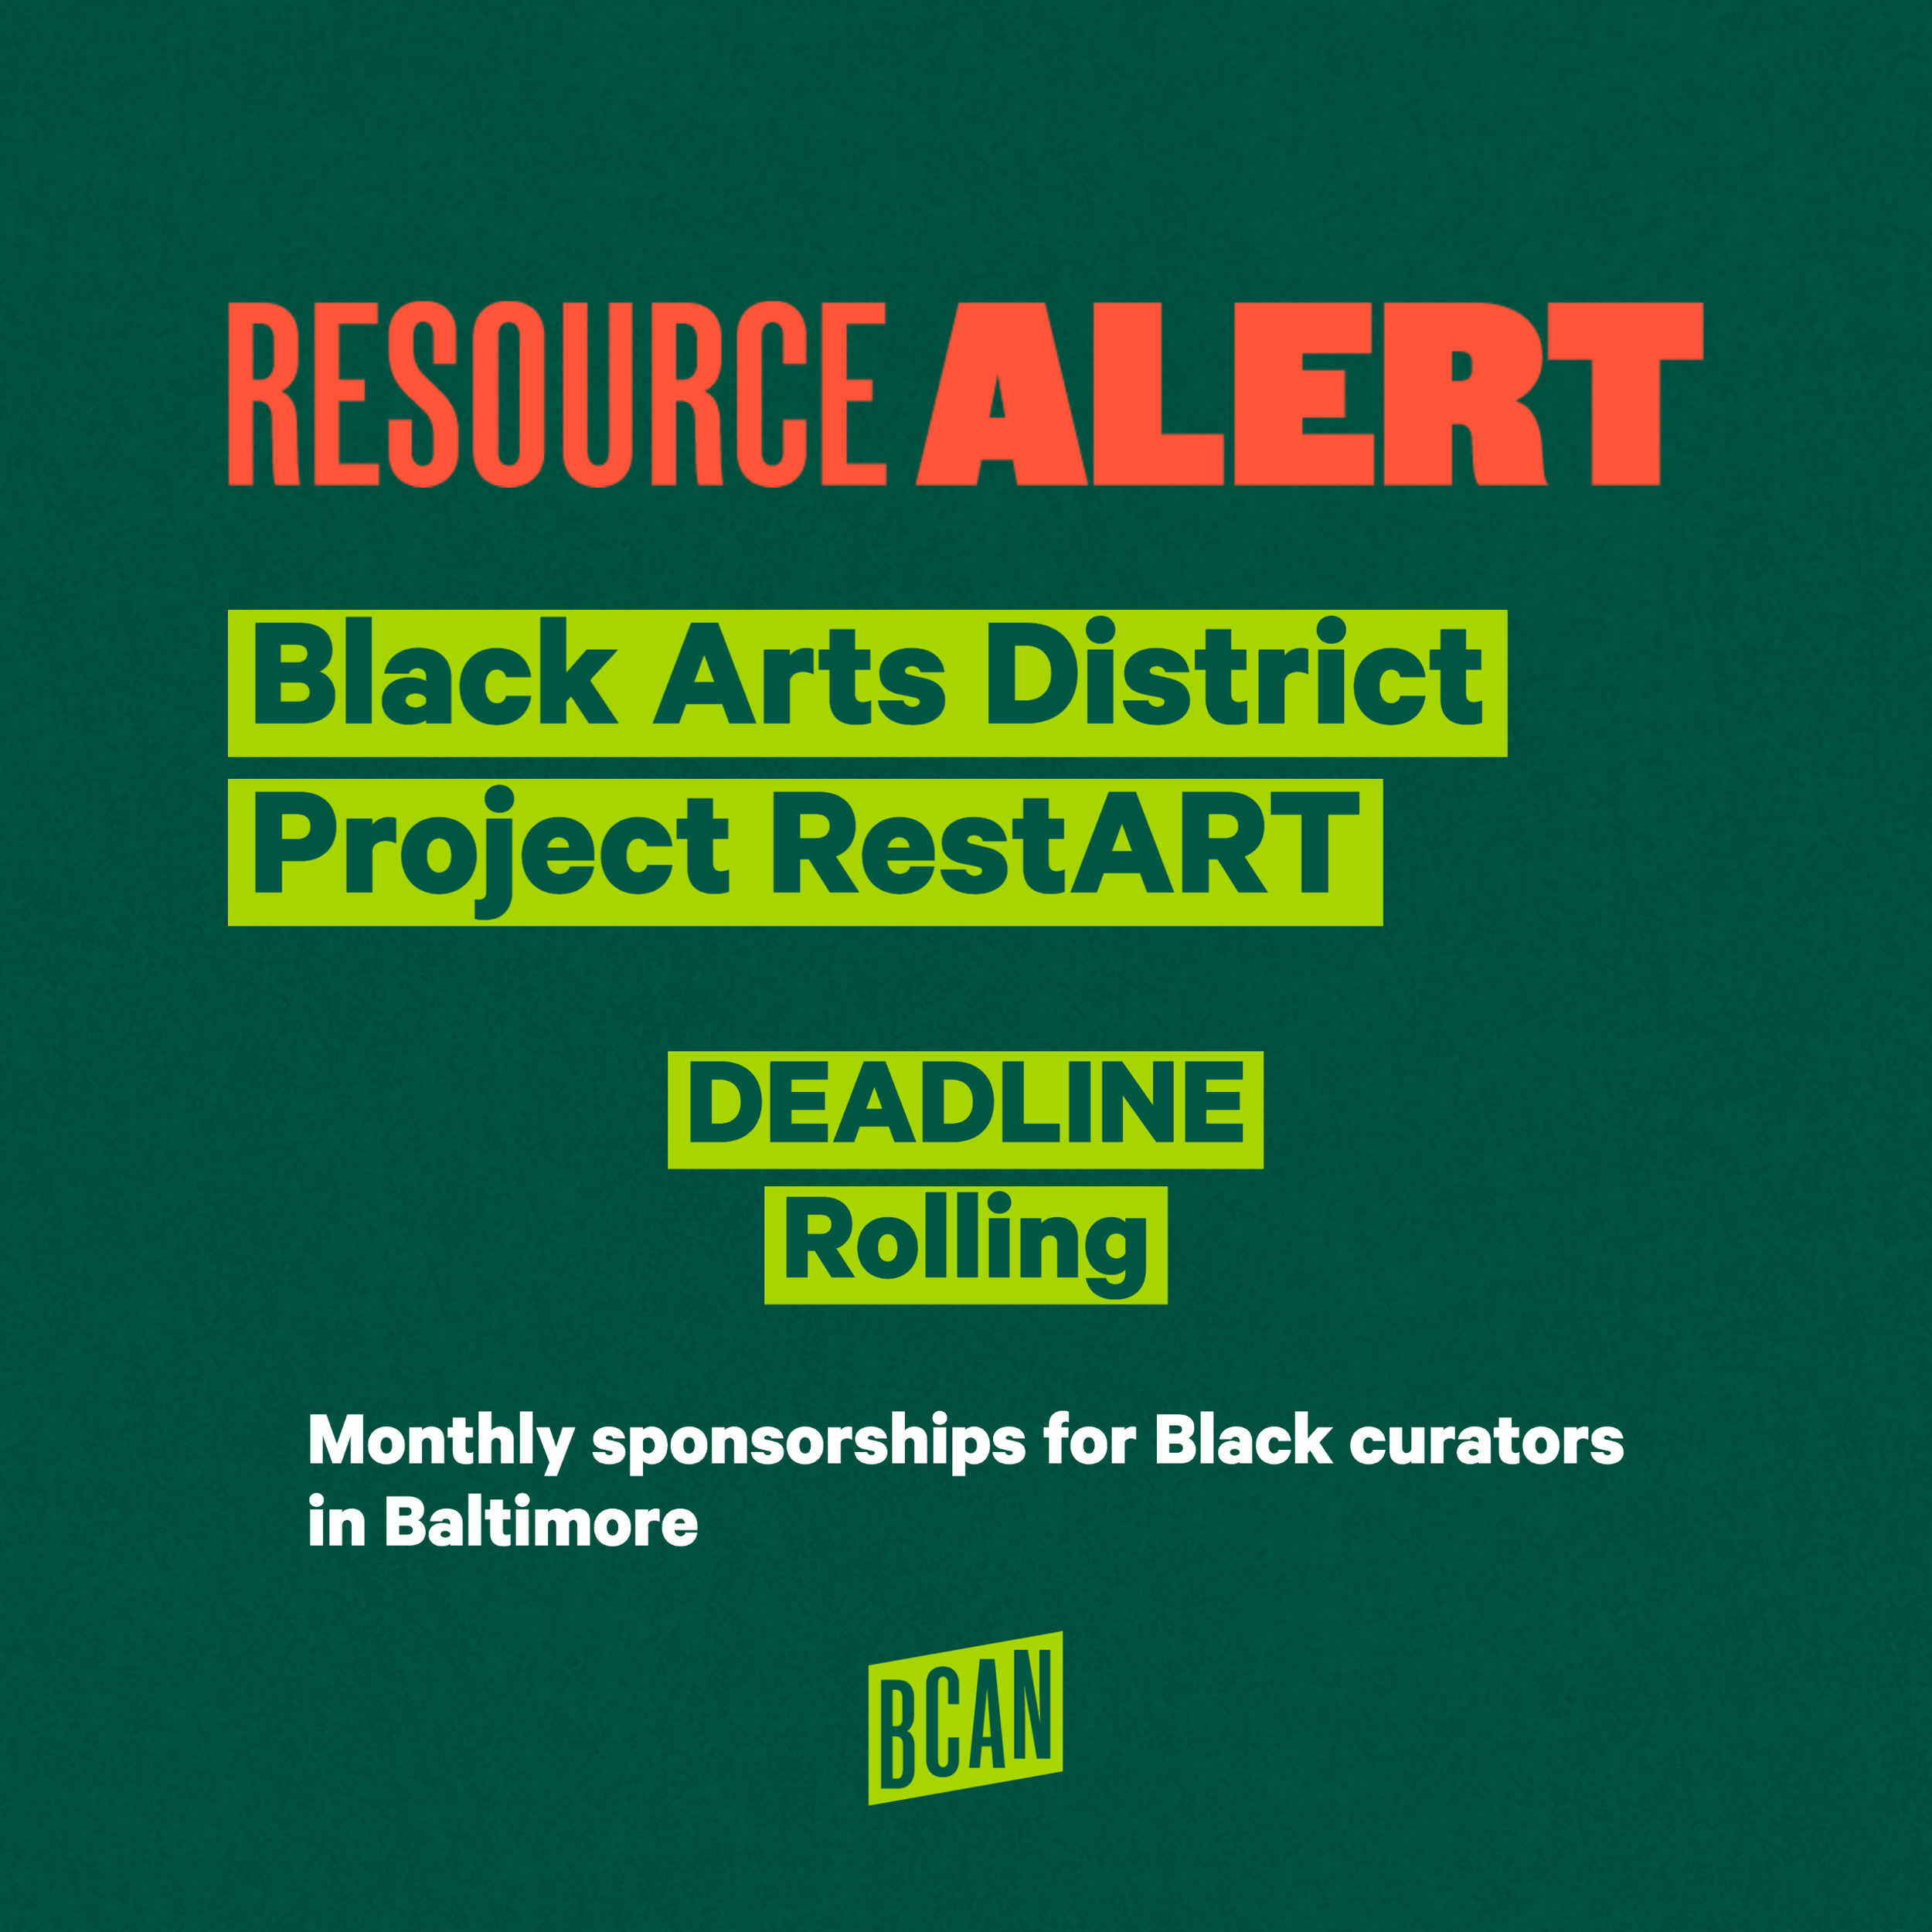 Black Arts District Project Restart